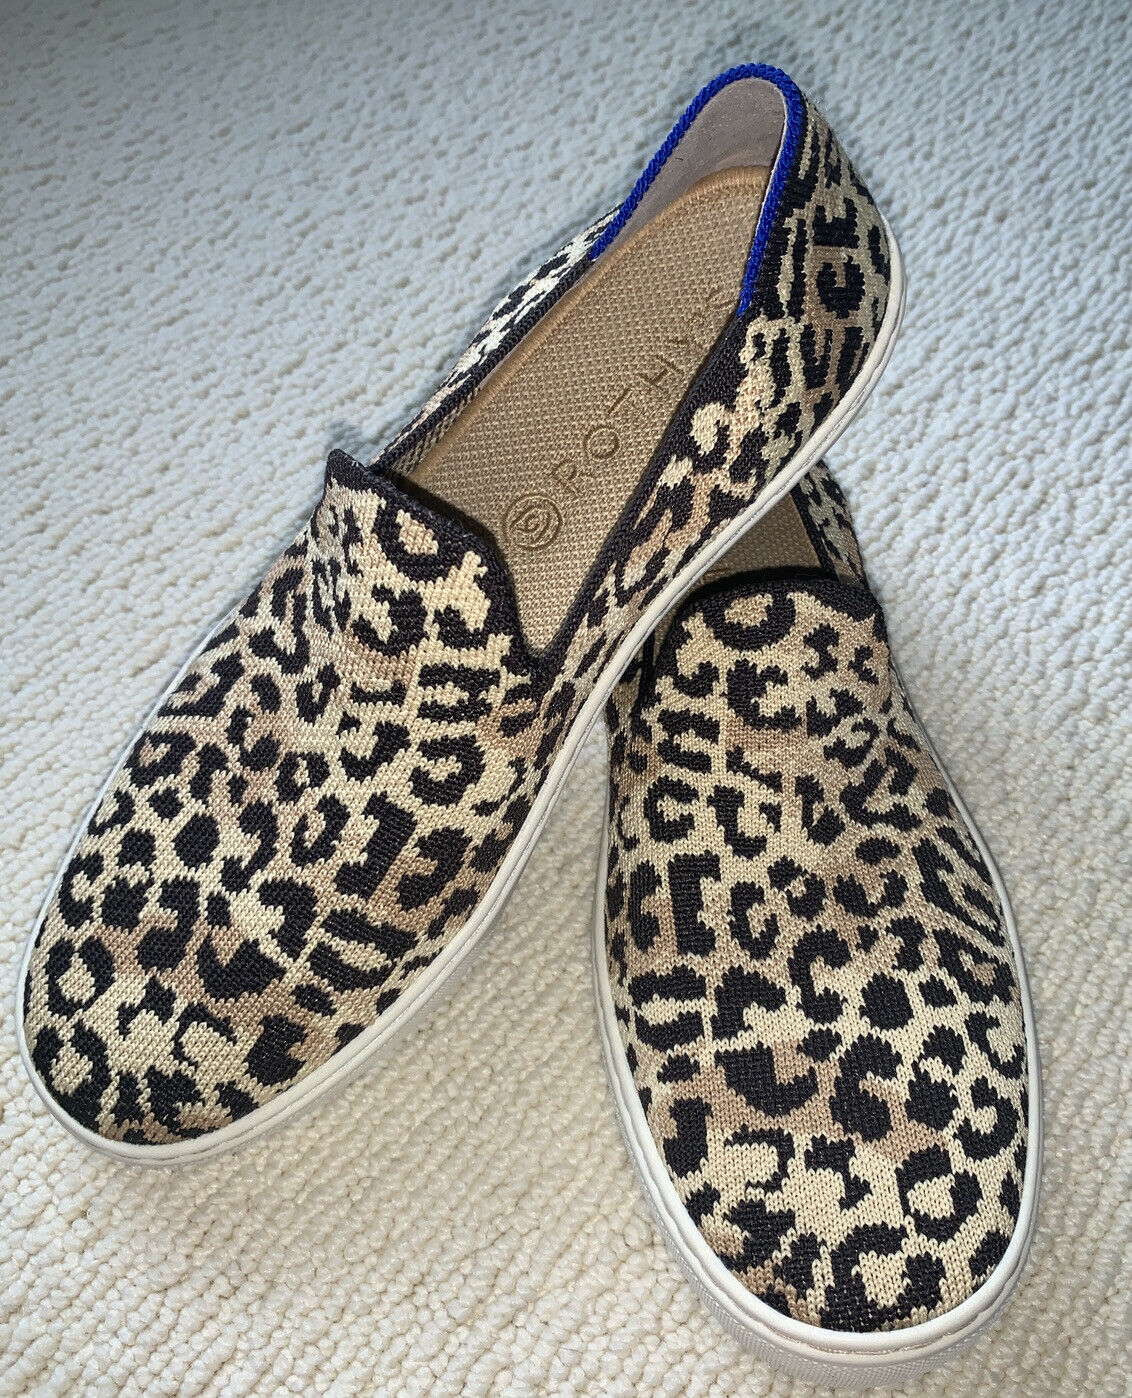 Rothys Womens Camo Cat Sneakers Shoes 8 Low Top Leopard Cheetah Slip-Ons EUC